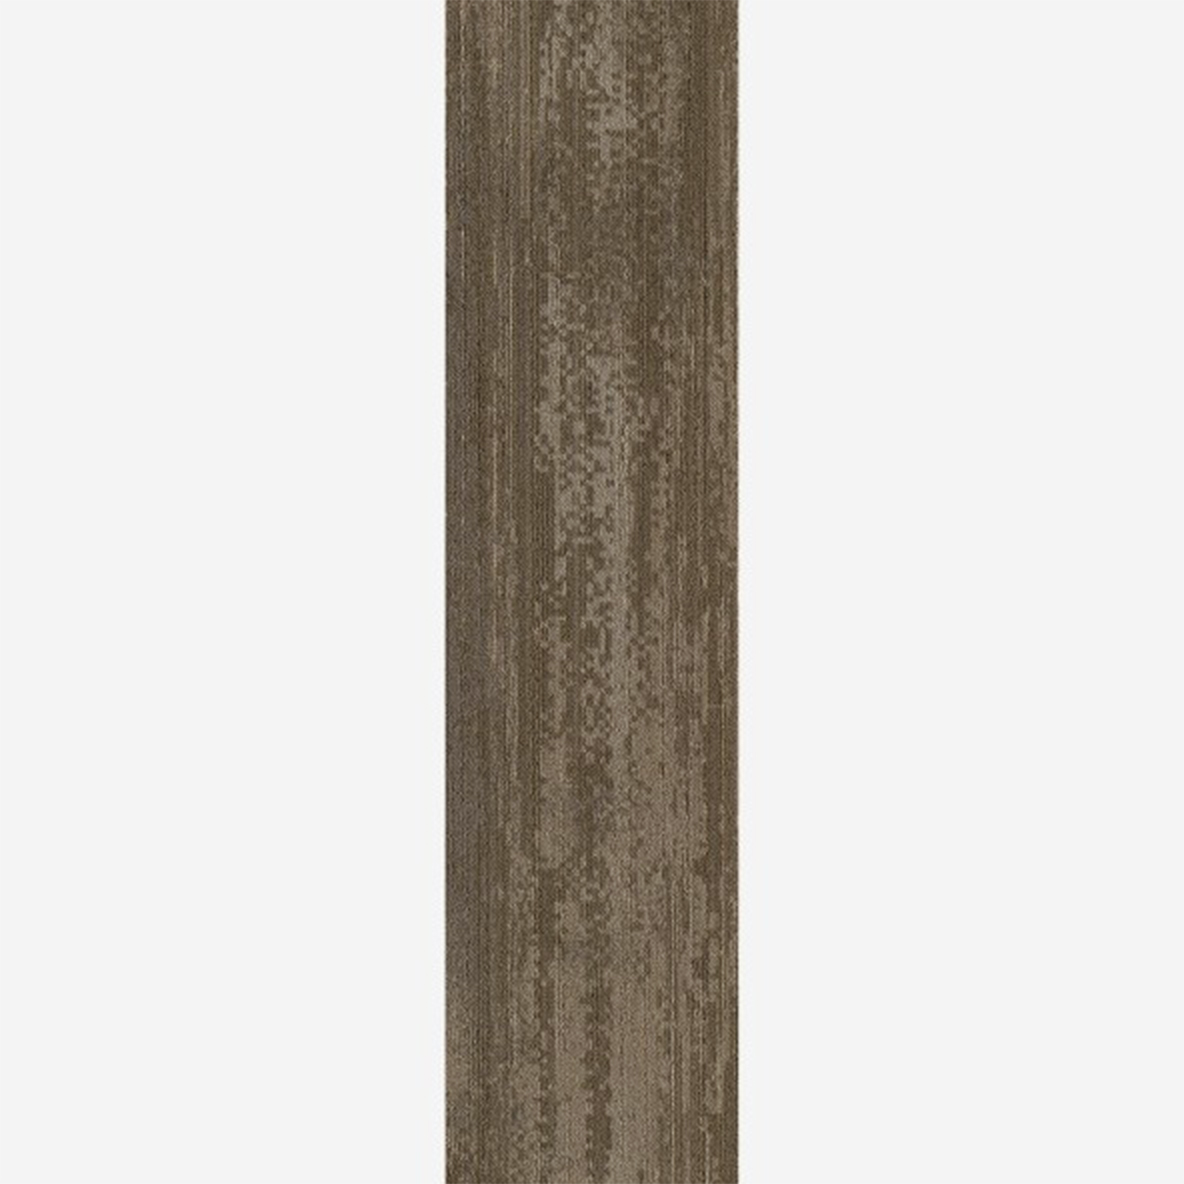 Ingrained Commercial Carpet Plank Colors .28 Inch x 25 cm x 1 Meter Per Plank  Beech Medium Full